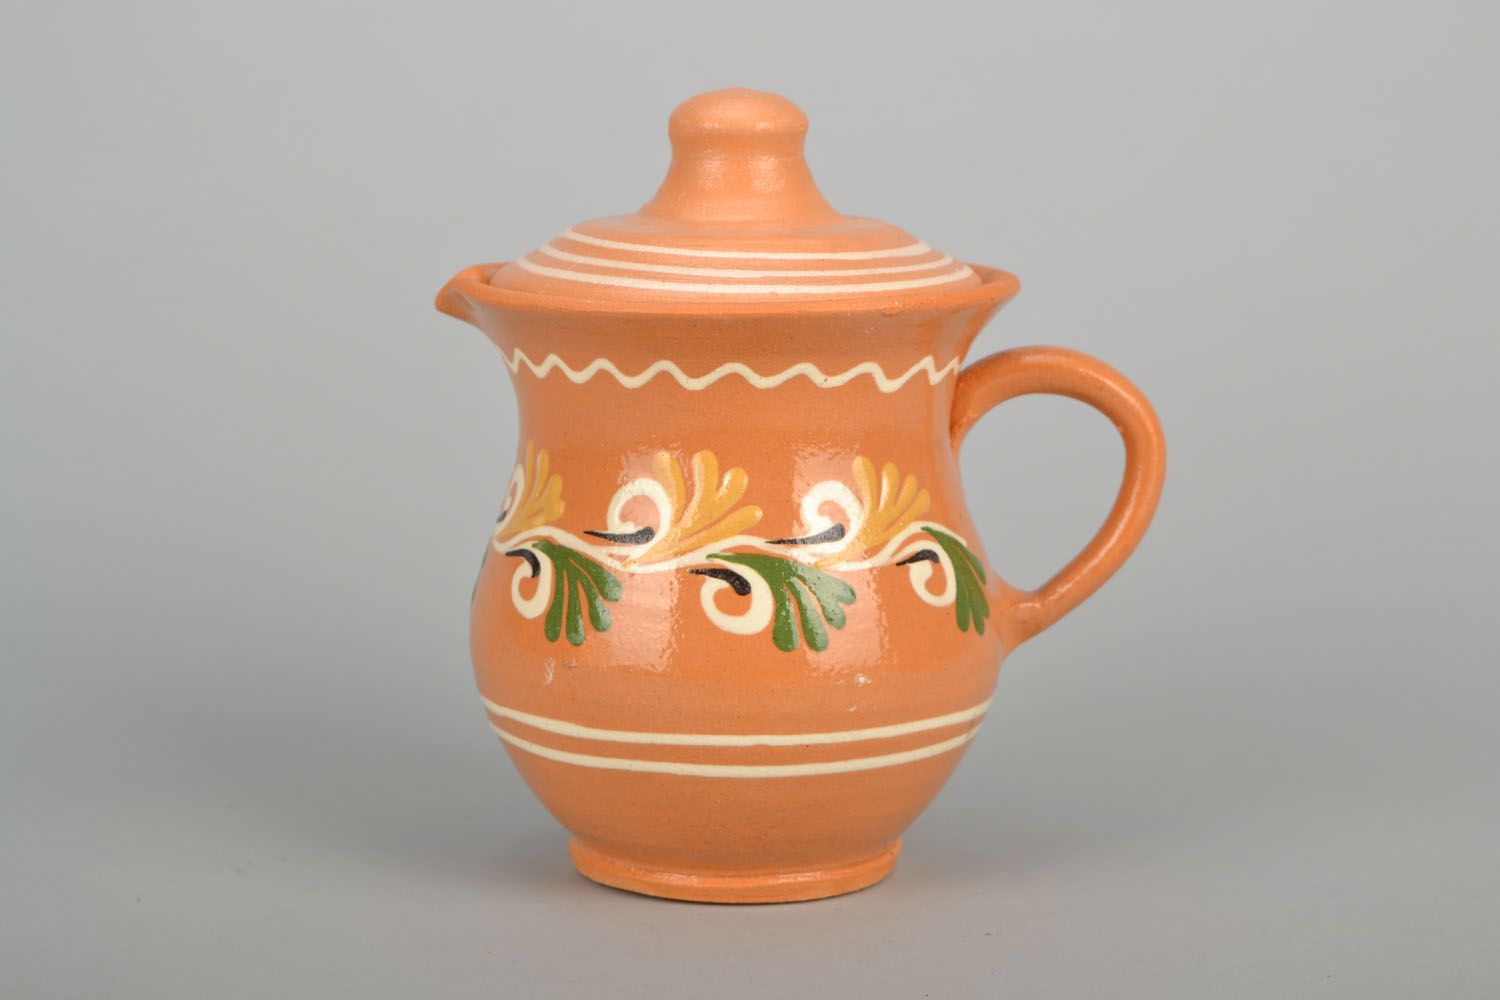 12 oz ceramic porcelain creamer pitcher with hand-painted floral design 1,23 lb photo 3